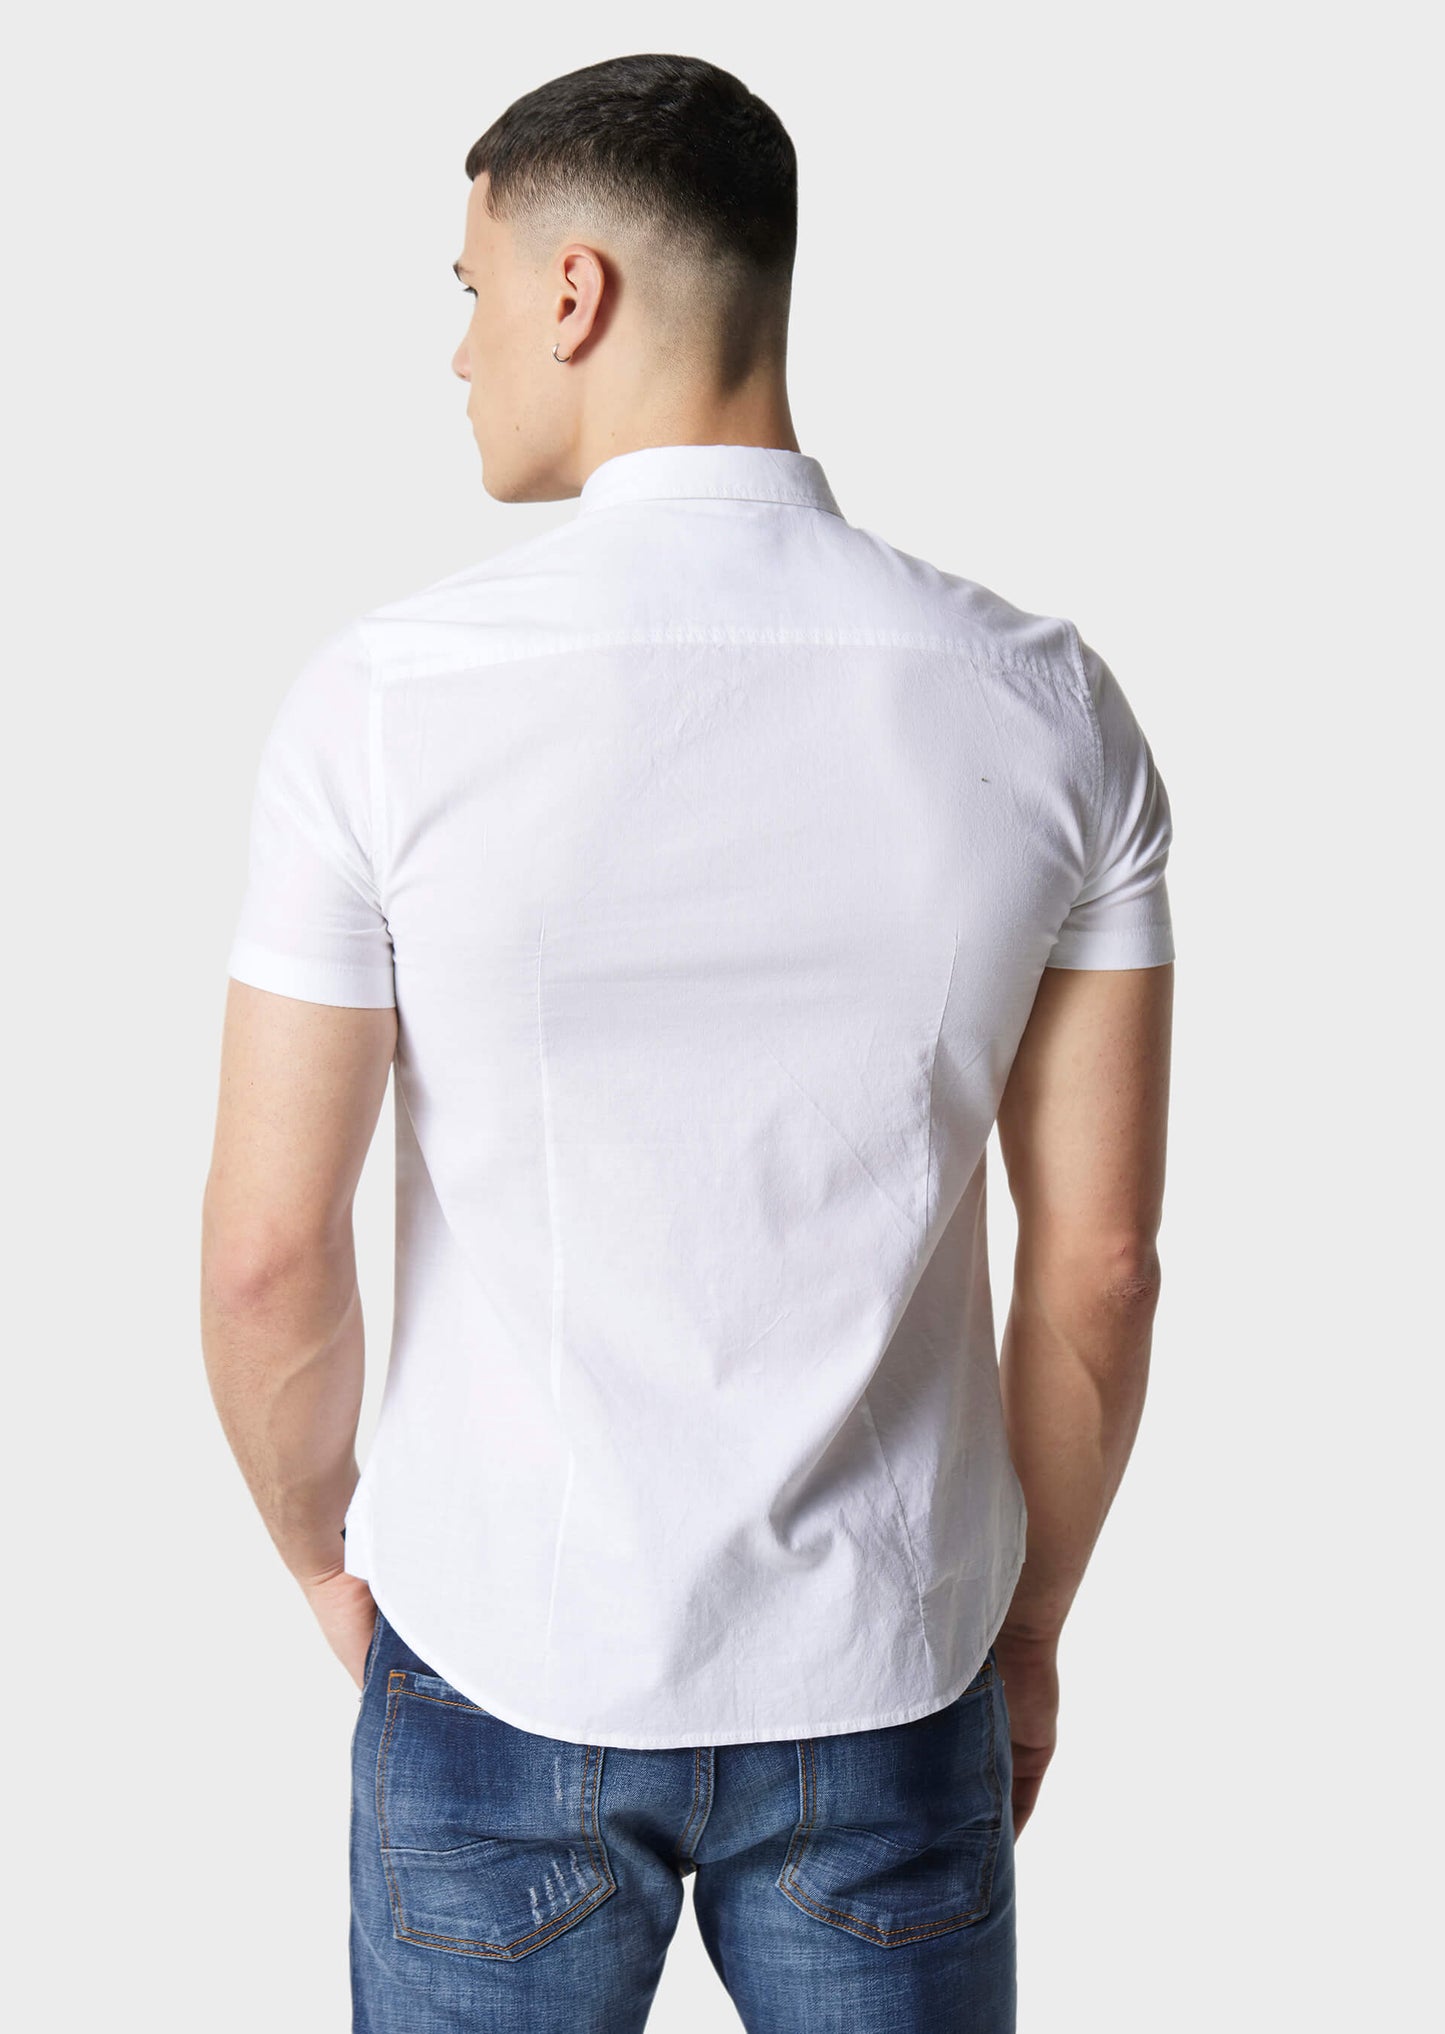 Debo White Shirt